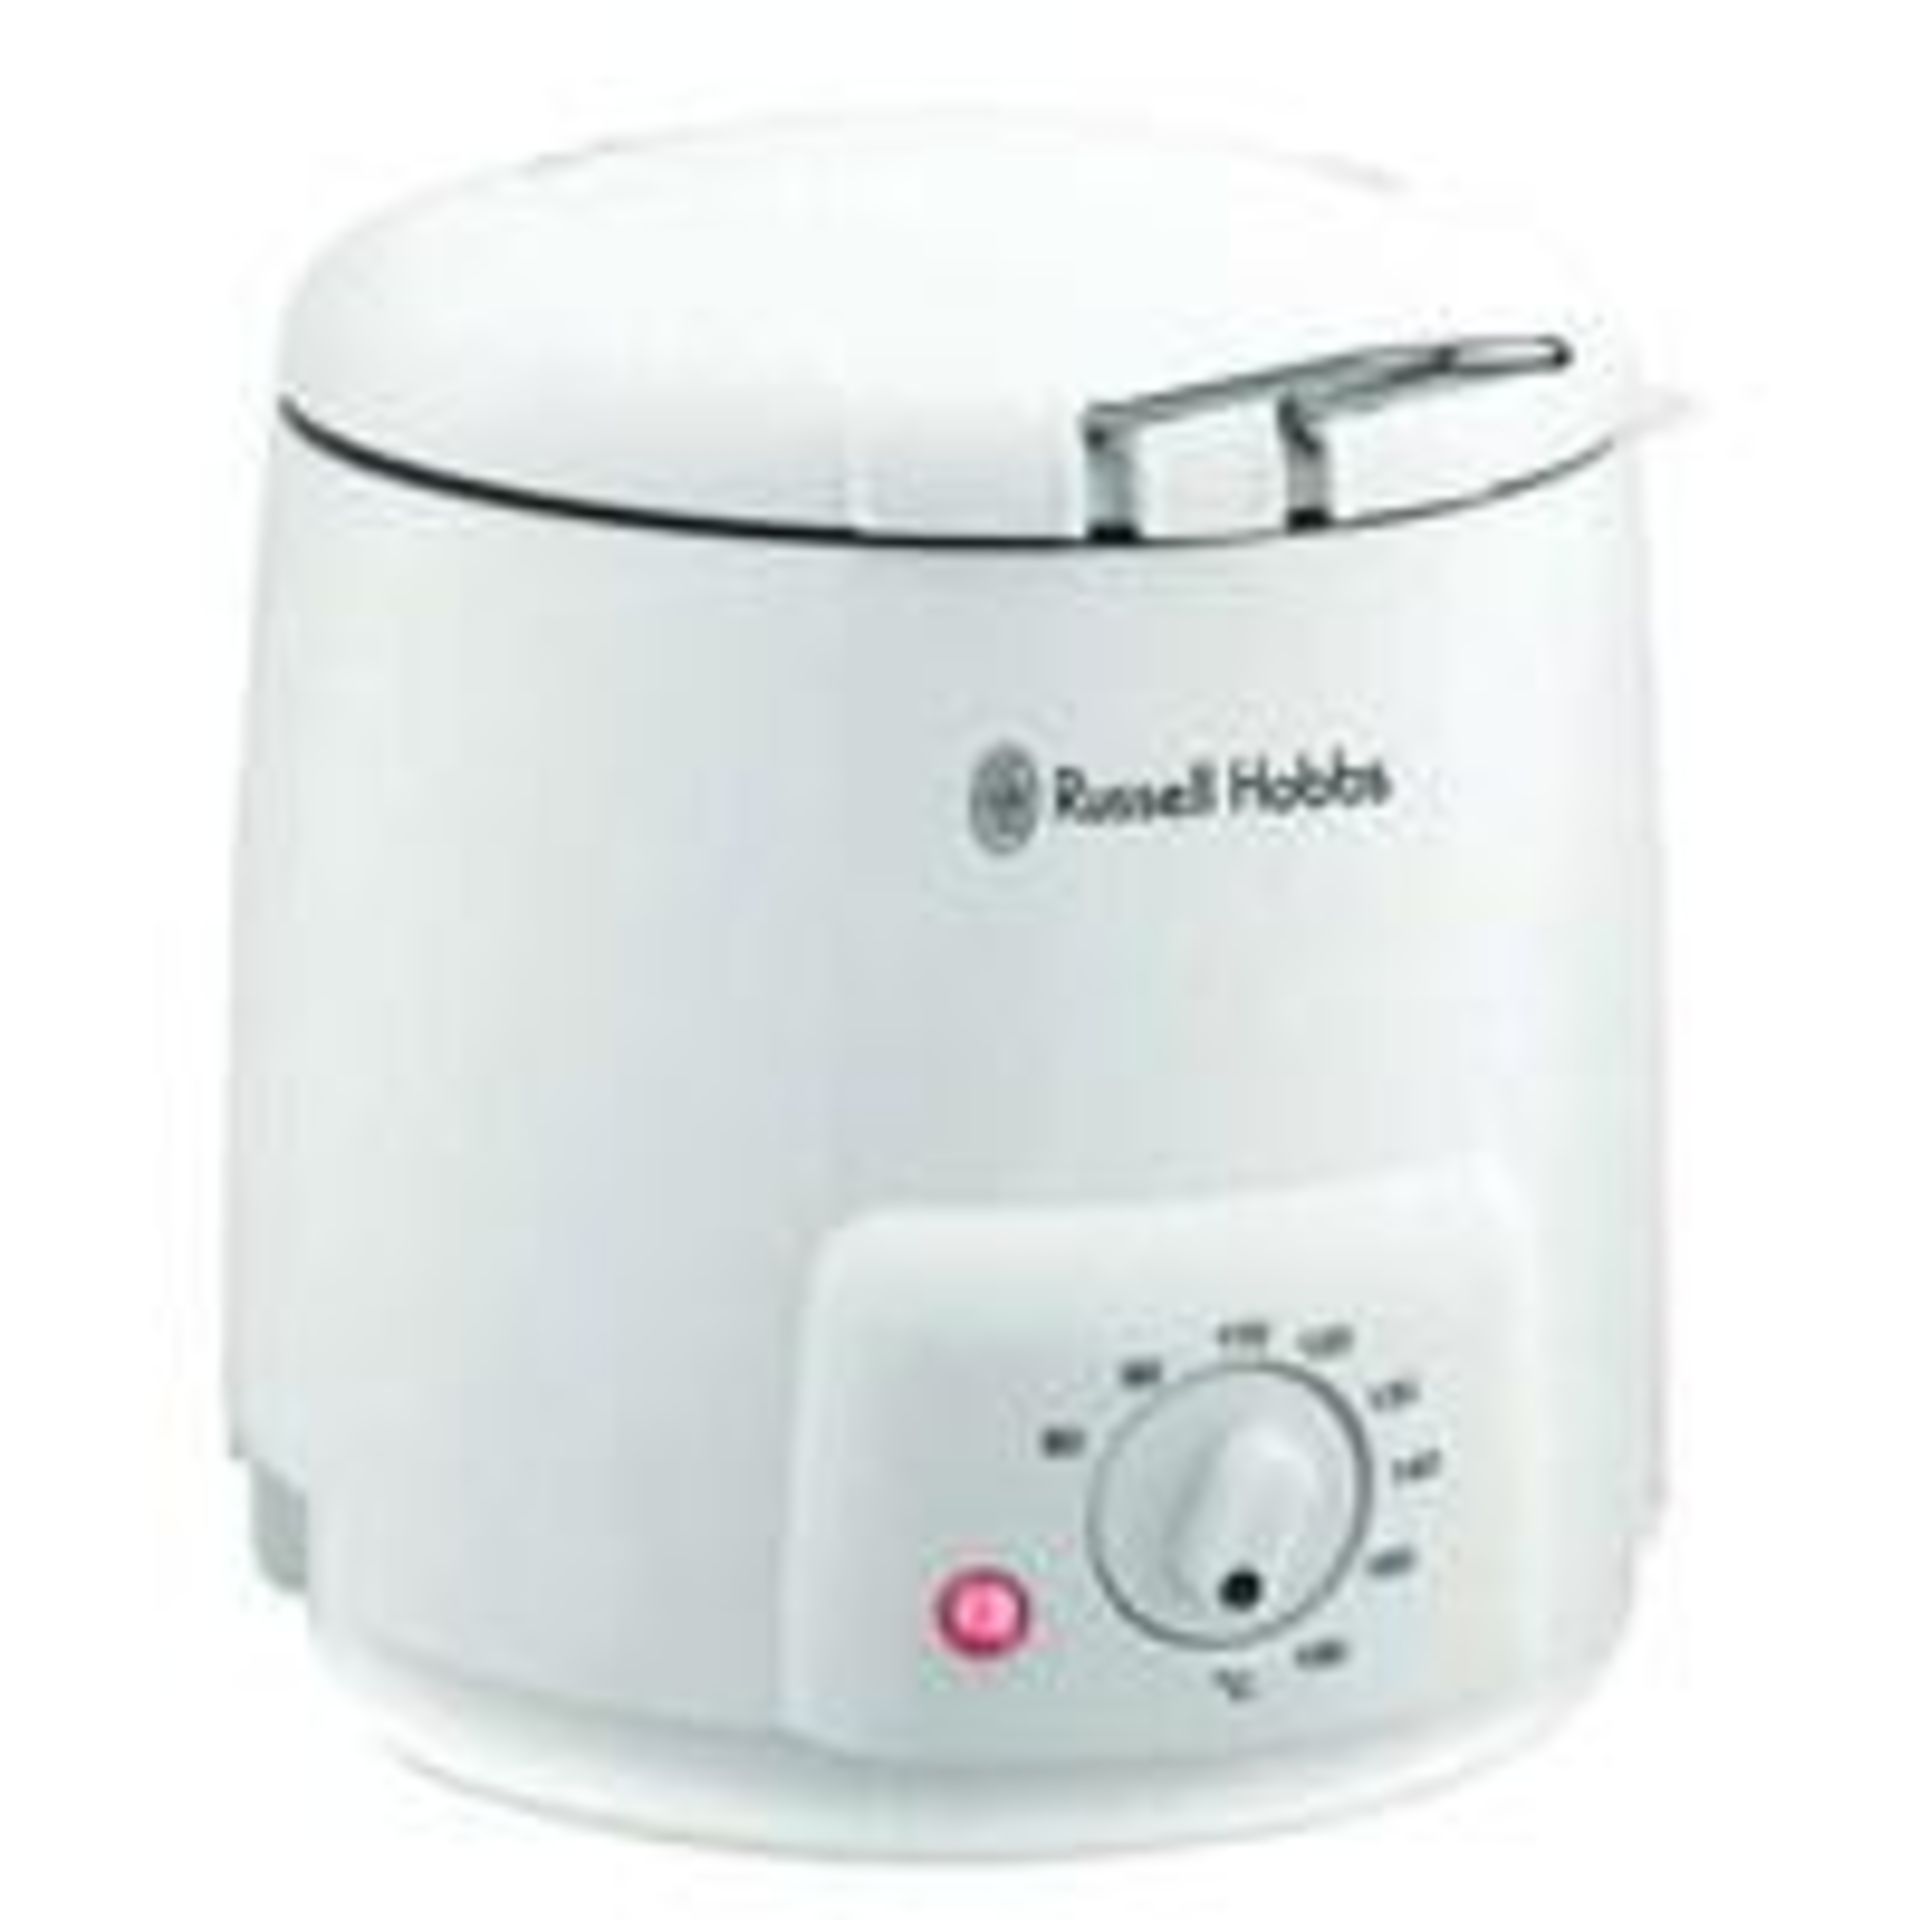 V Brand New Russell Hobbs 350g Food Capacity Compact Deep Fryer ISP £15.99 (Amazon)